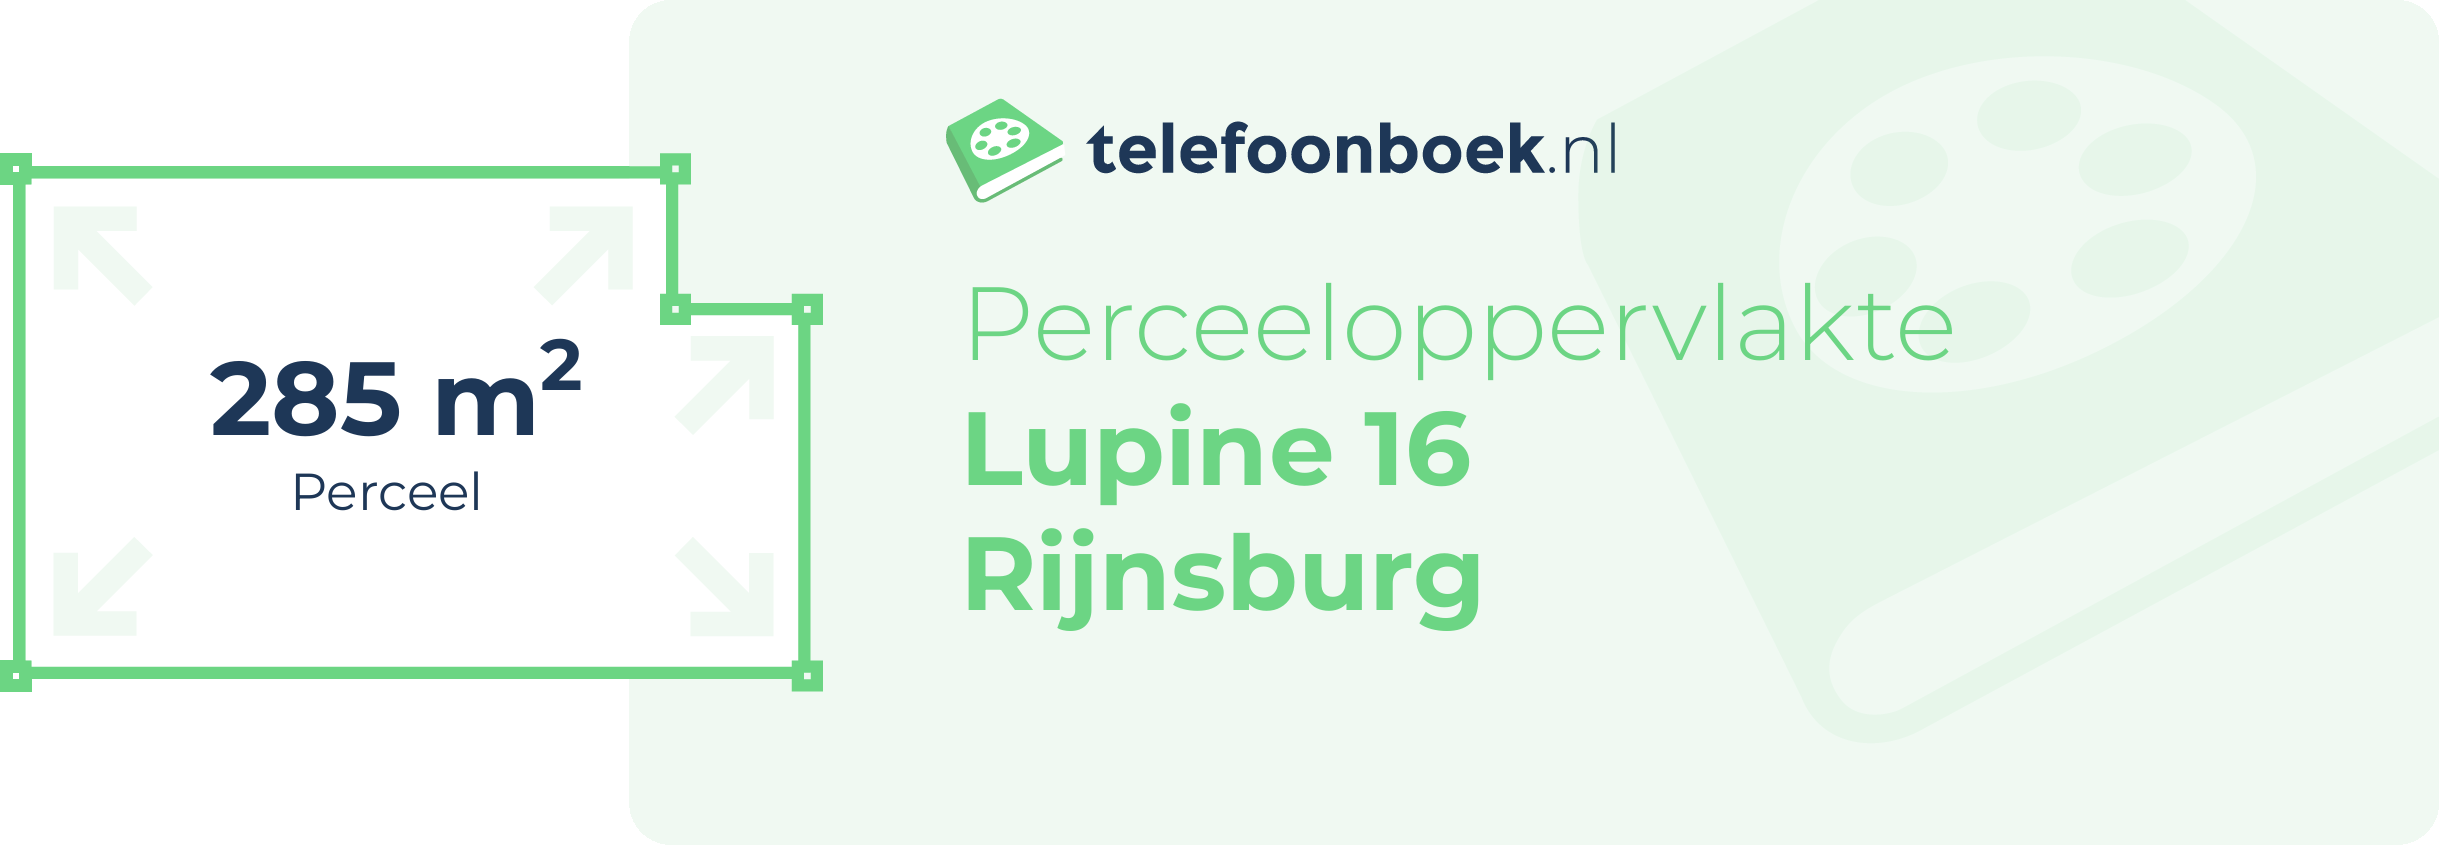 Perceeloppervlakte Lupine 16 Rijnsburg